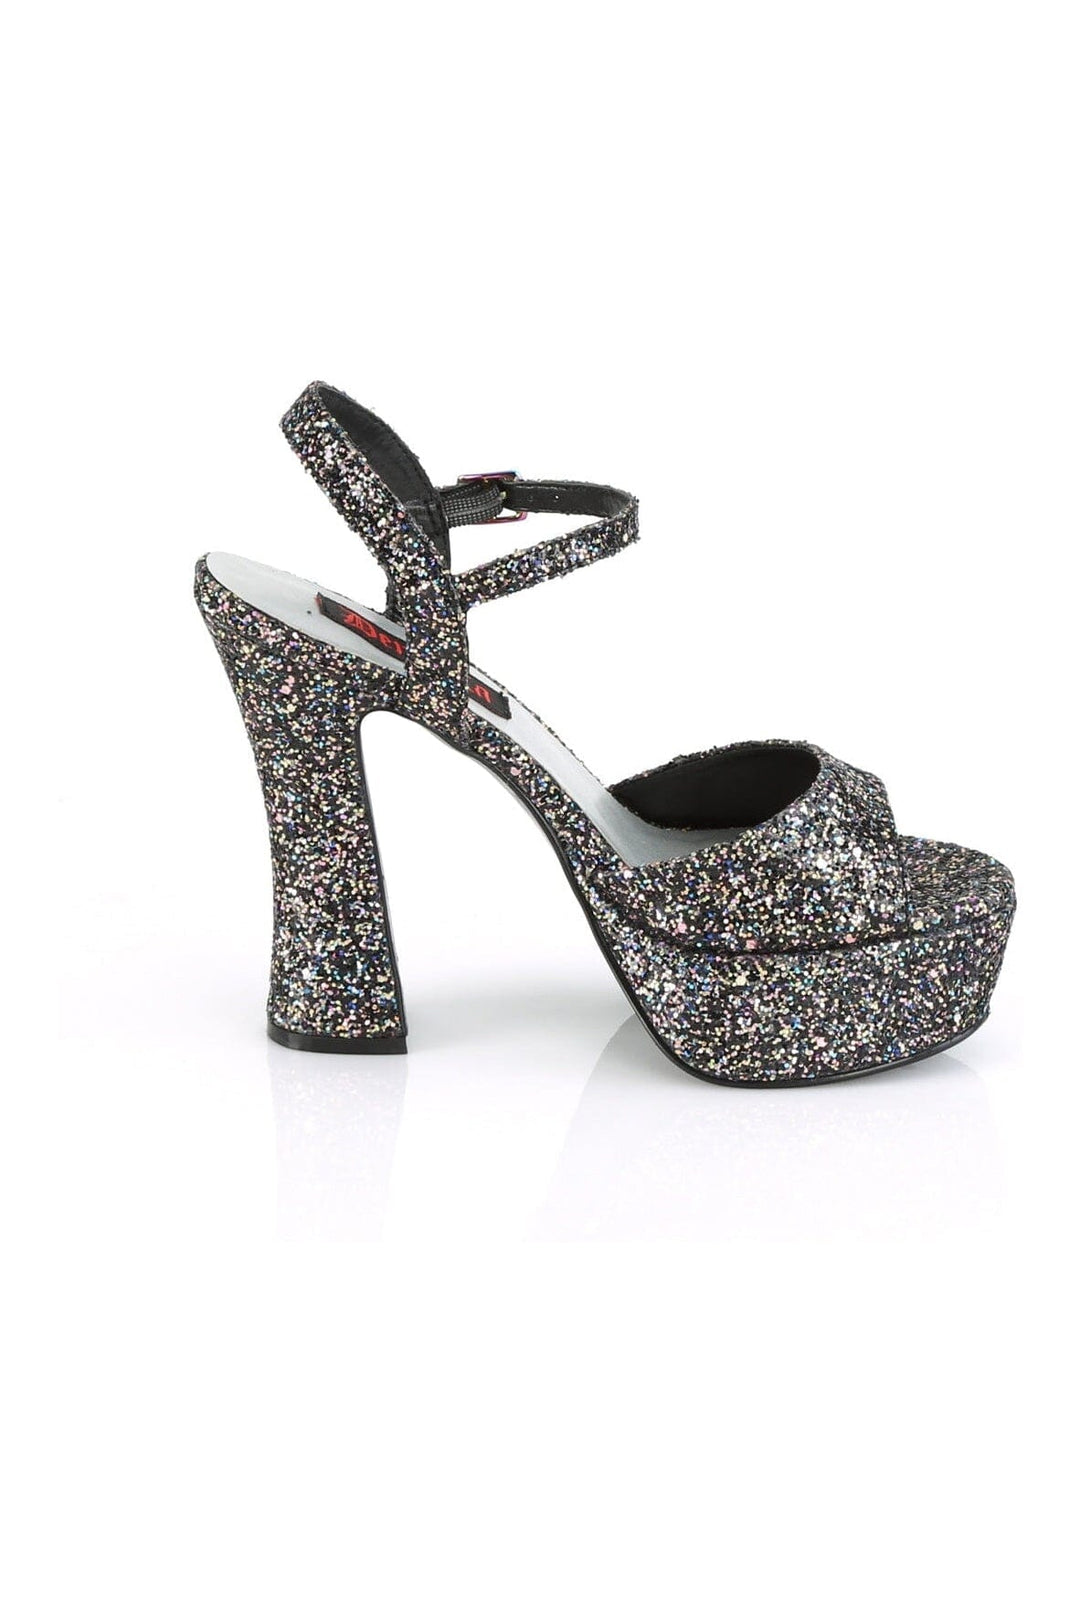 DOLLY-09 Black Glitter Sandal-Sandals-Demonia-SEXYSHOES.COM